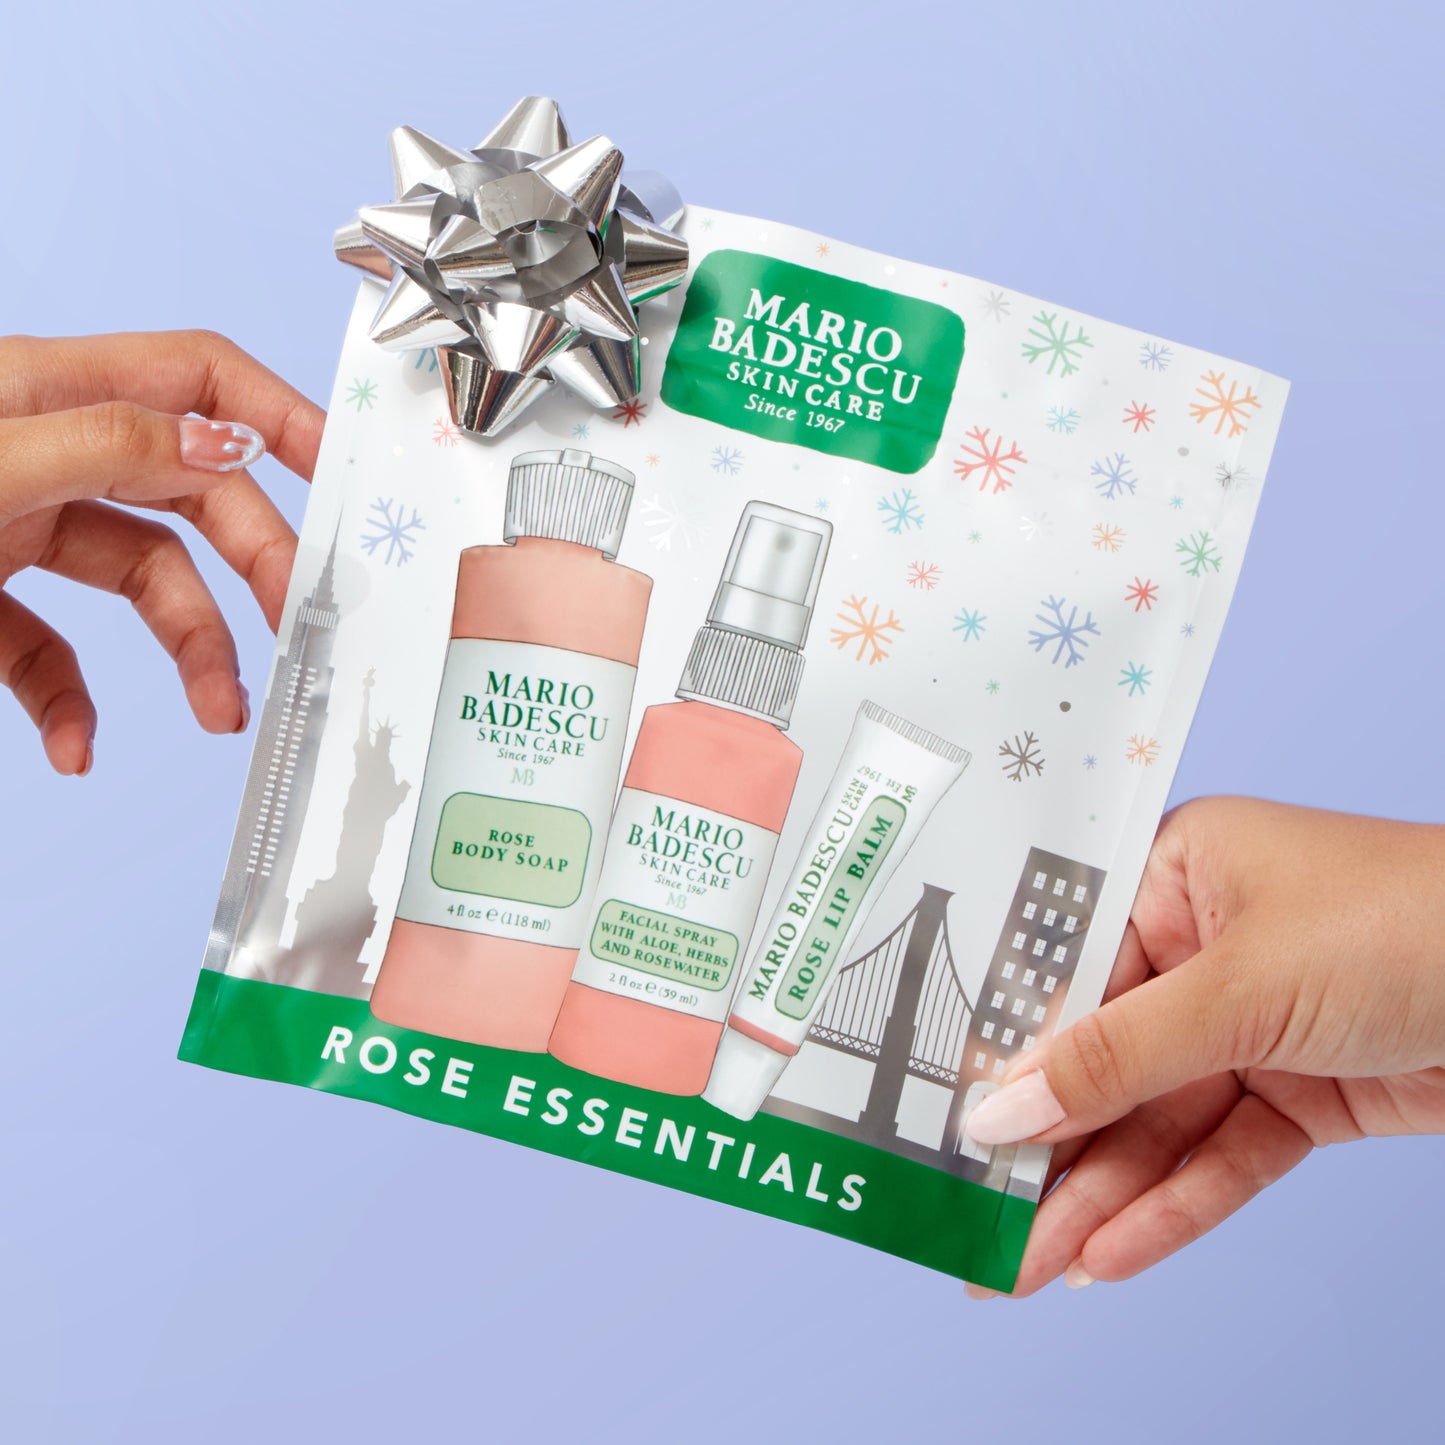 Rose Essentials Holiday Kit